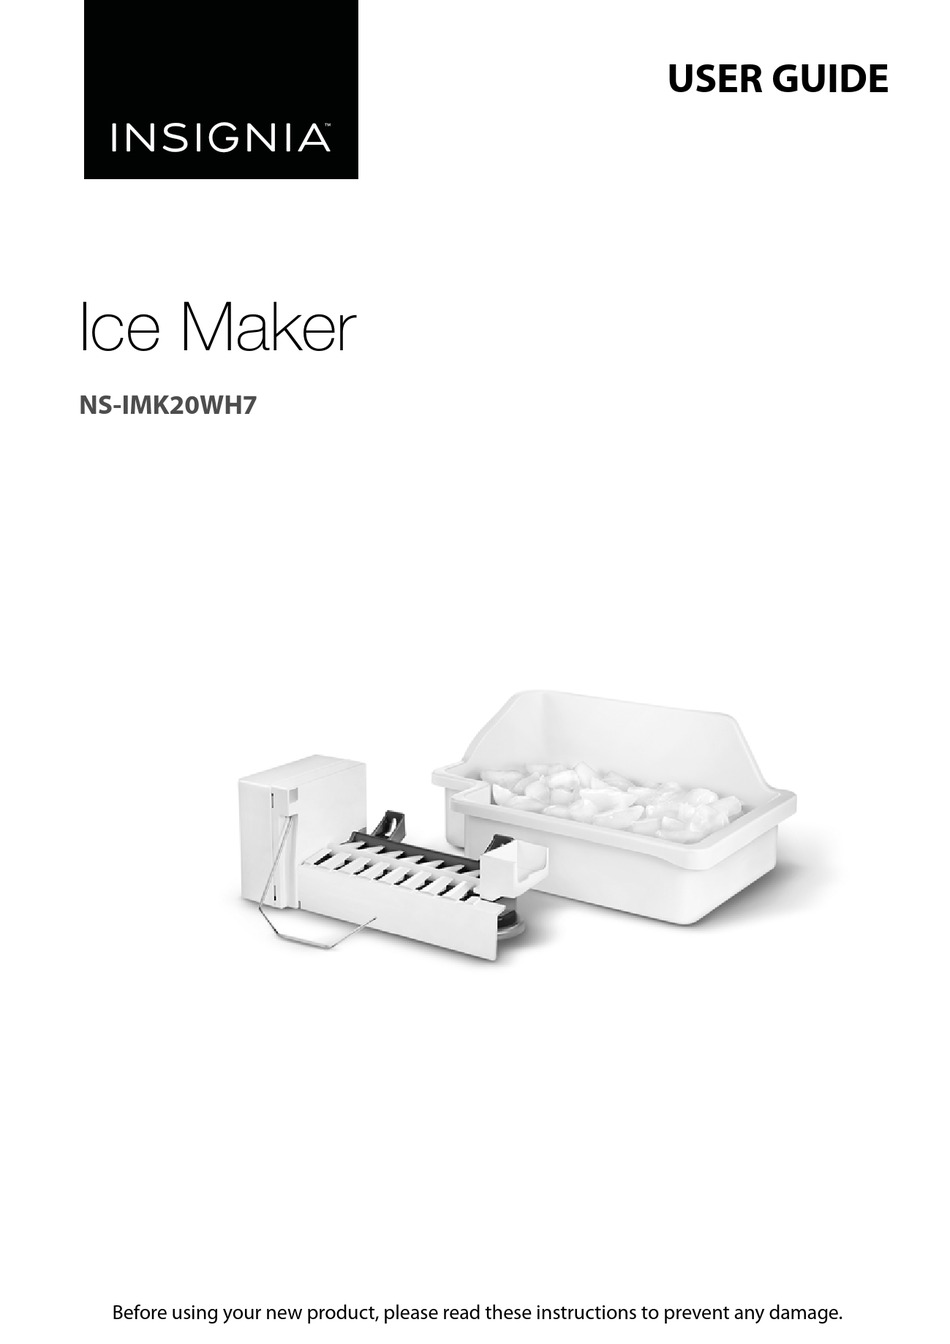 Insignia NS-IMK20WH7 Ice Maker User Guide - Manuals Clip